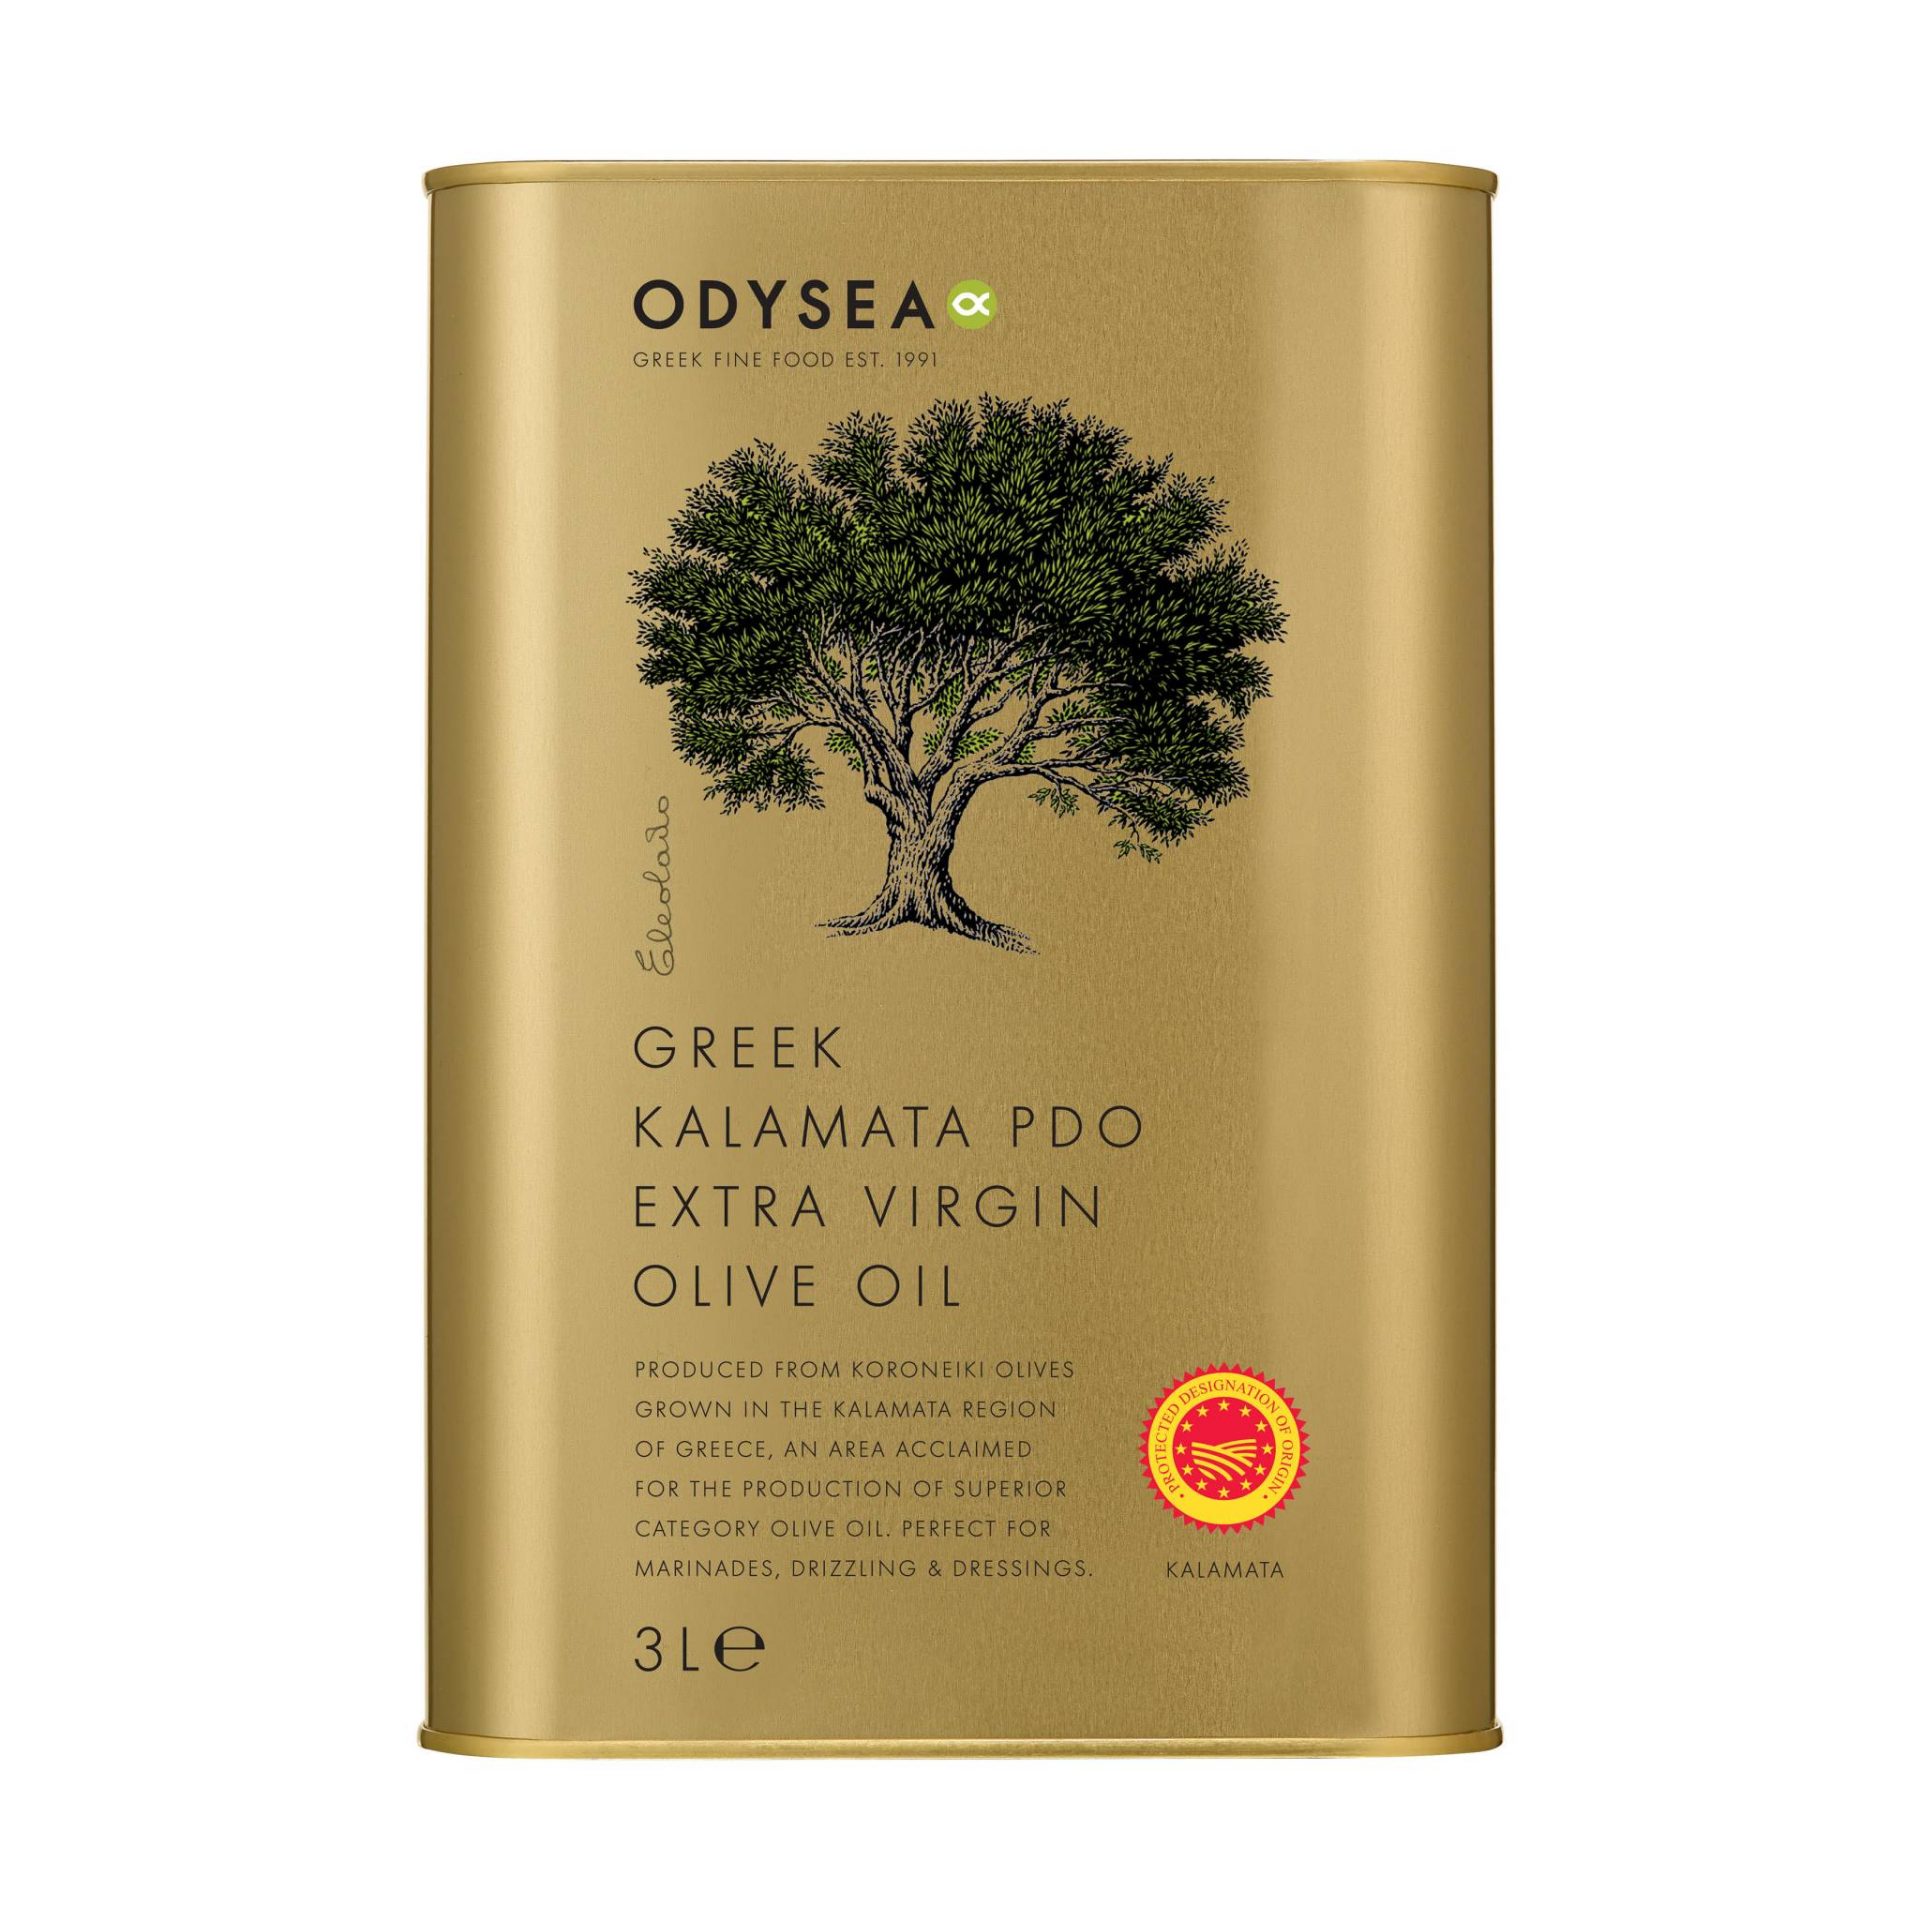 Odysea Greek PDO Kalamata Extra Virgin Olive Oil (3l Tin) The Good